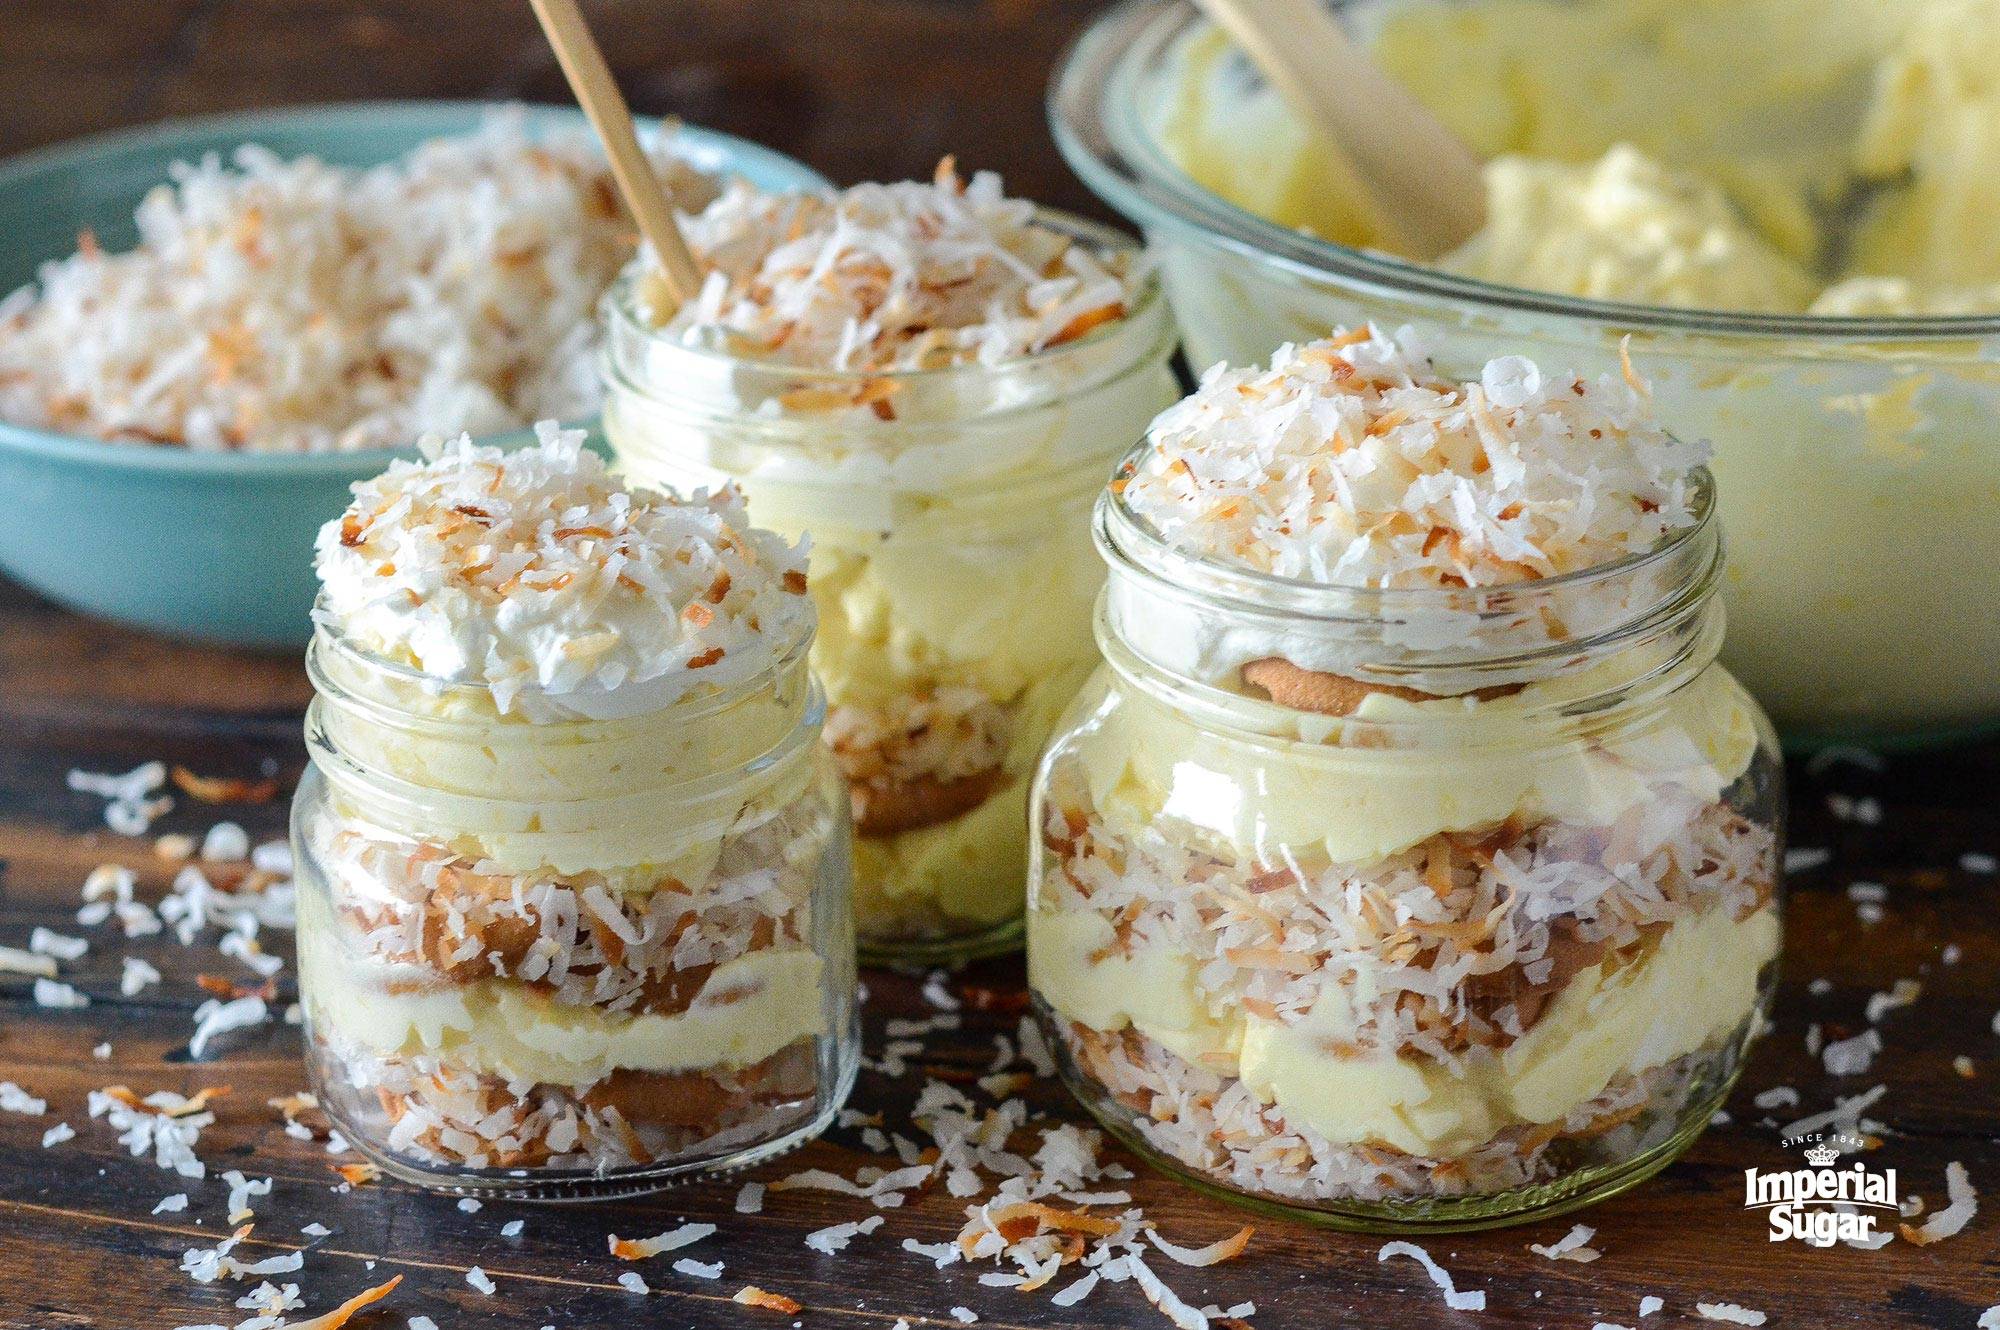 https://www.dixiecrystals.com/sites/default/files/recipe/Toasted-Coconut-Cream-Pudding-imperial.jpg